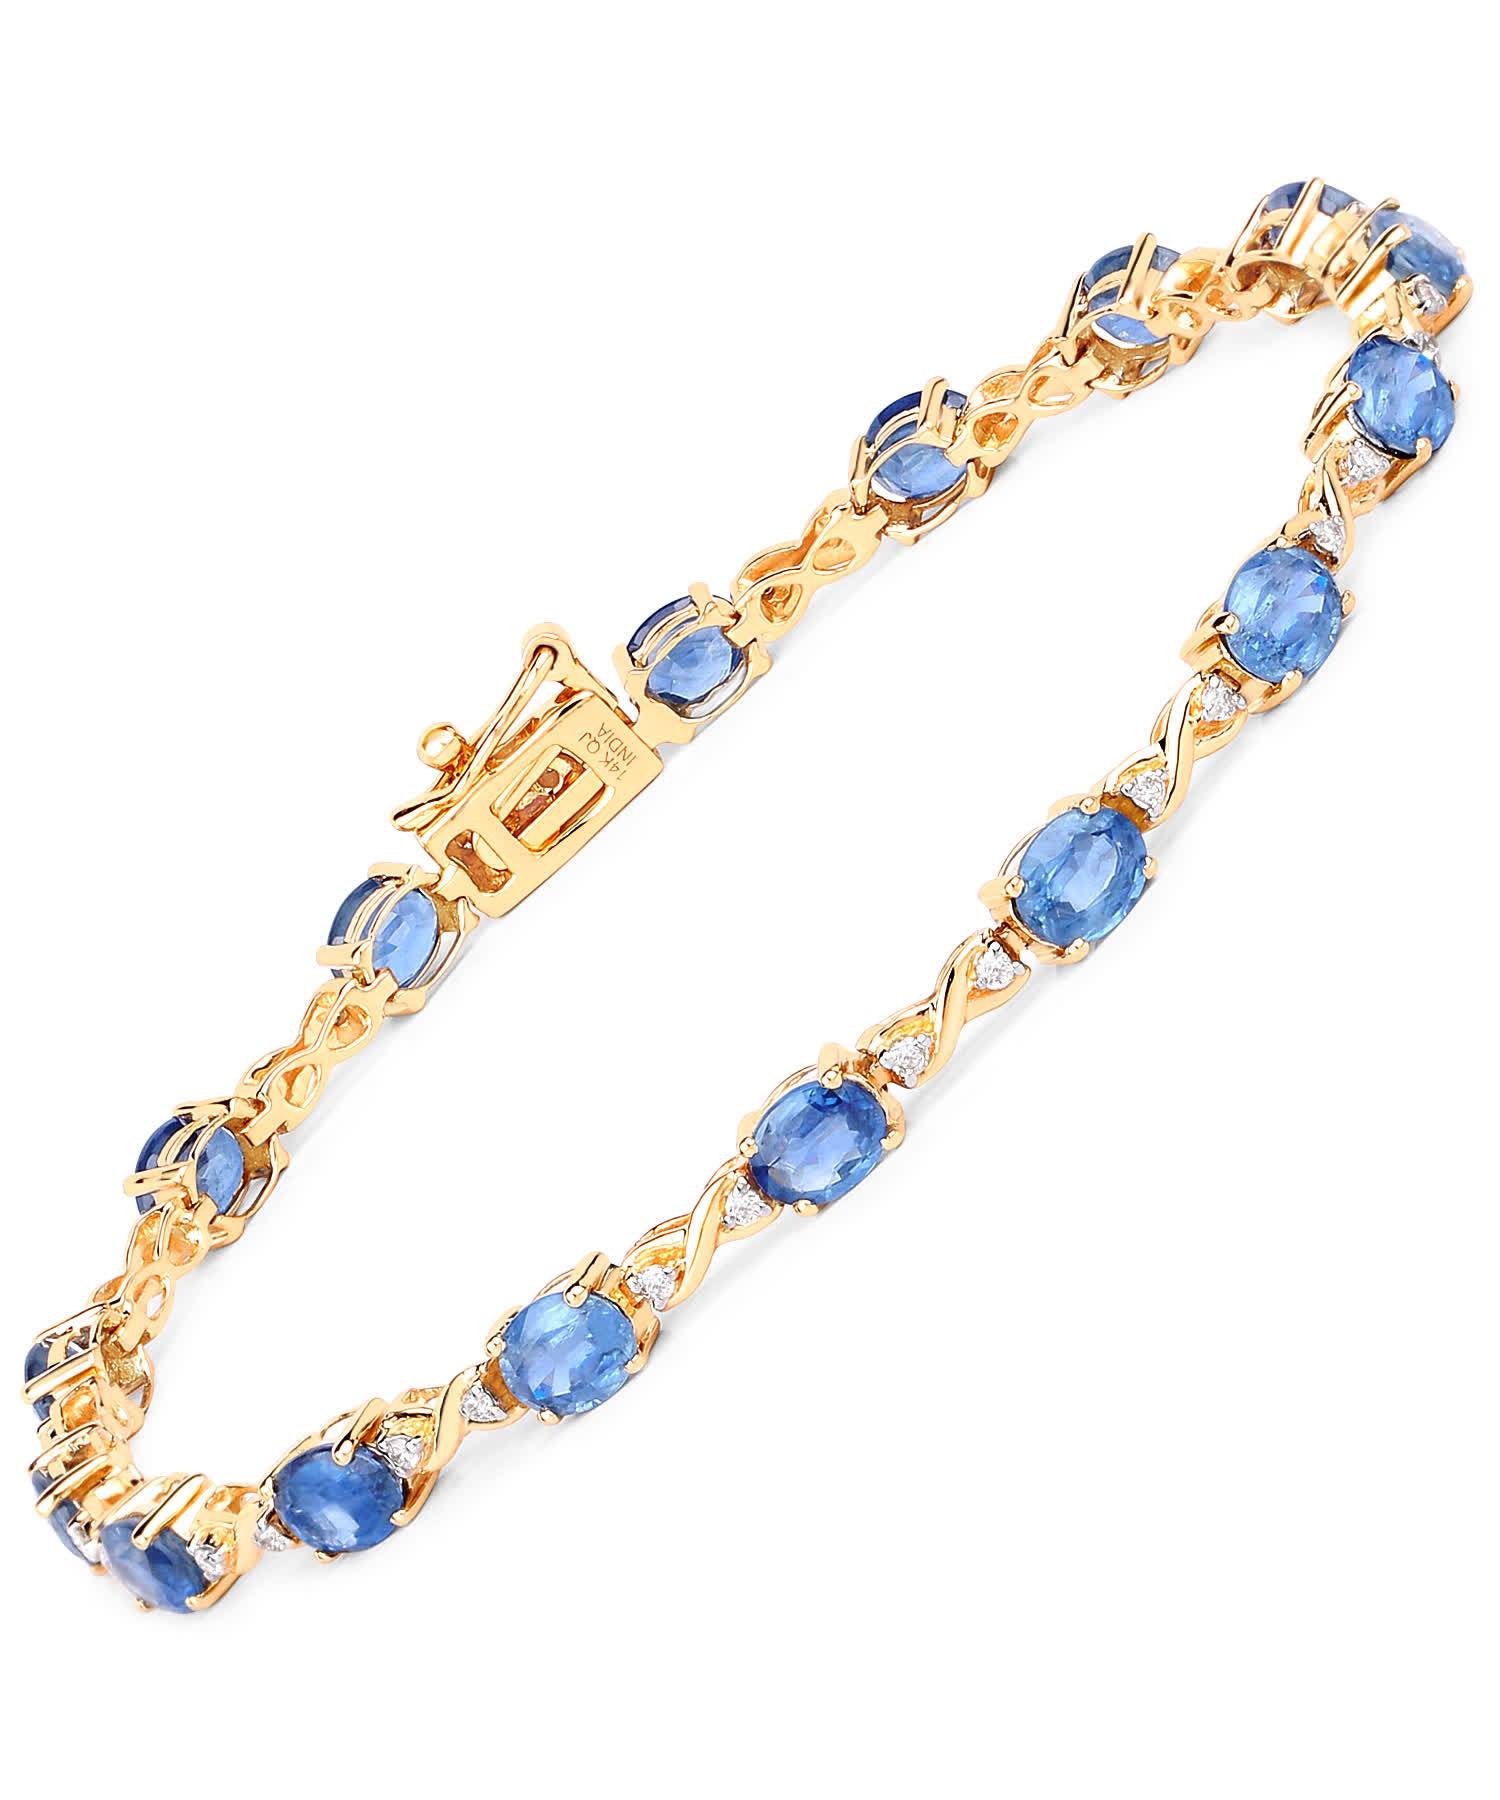 7.81ctw Natural Blue Sapphire and Diamond 14k Gold Link Bracelet View 1